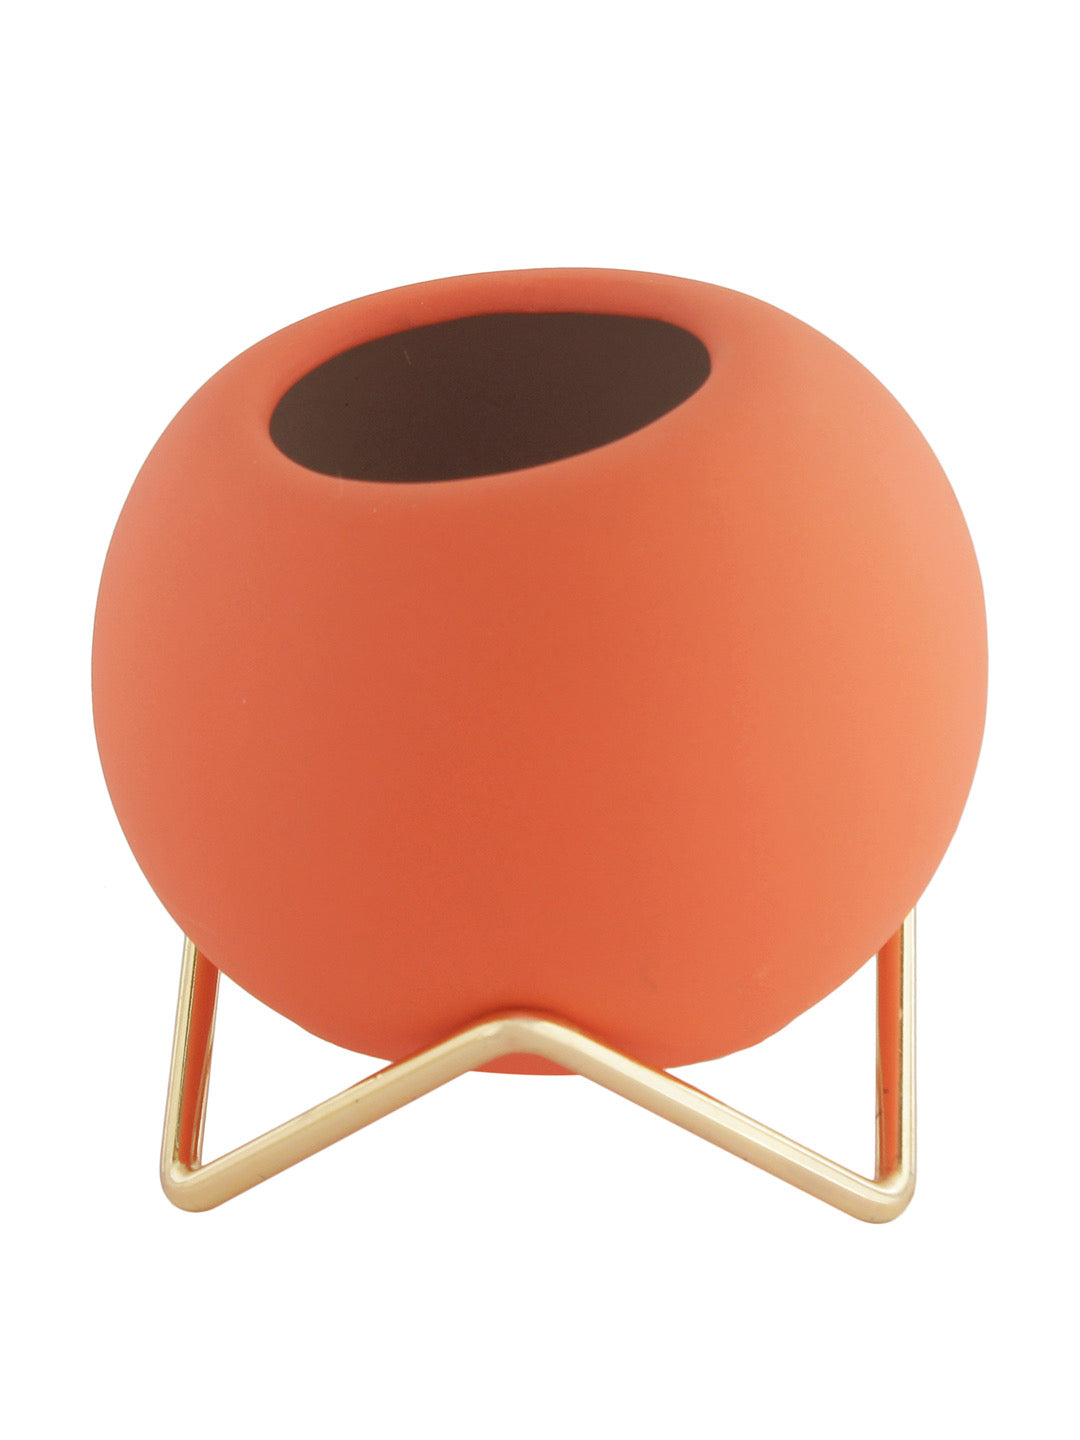 Orange Coloured Ceramic Vase with Golden Stand - Default Title (VAS2020182)